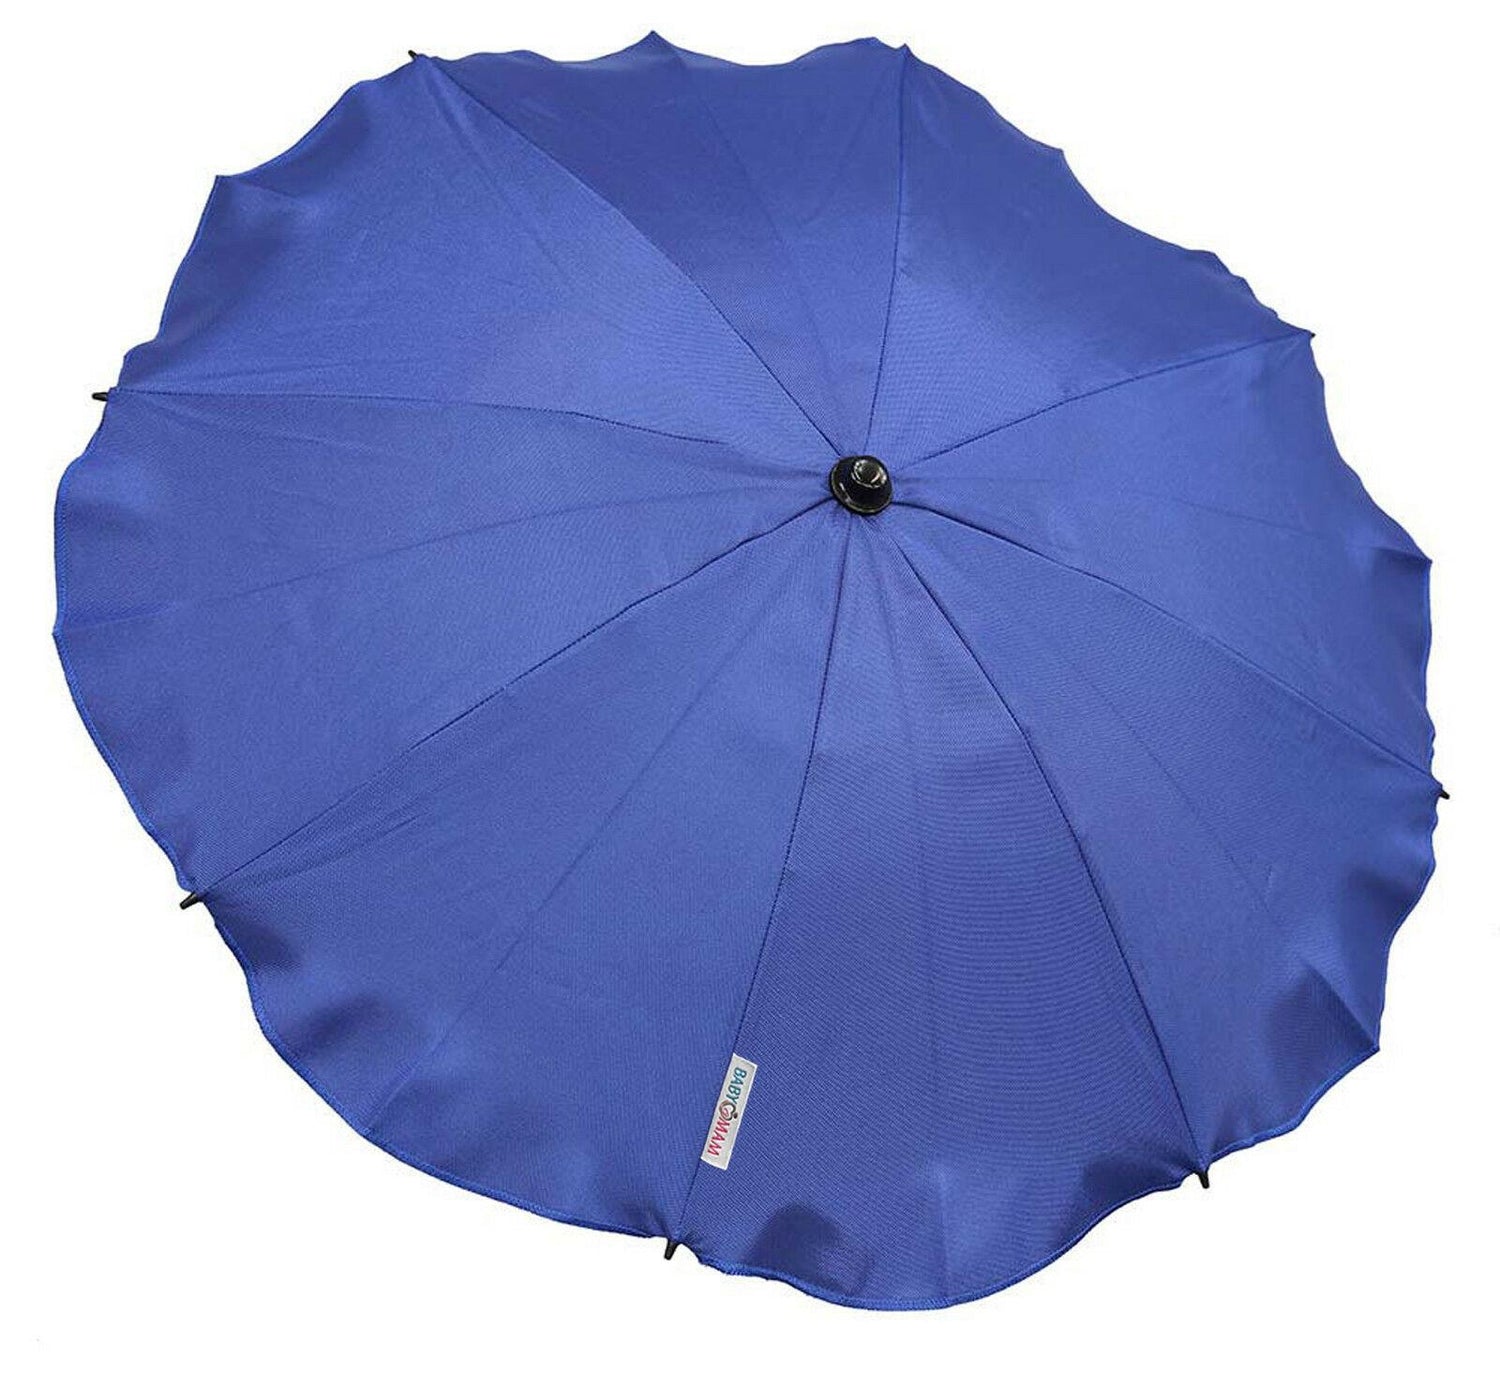 Baby Parasol Universal Sun Umbrella Pram Stroller Canopy Protect From Sun Rain Dark Blue